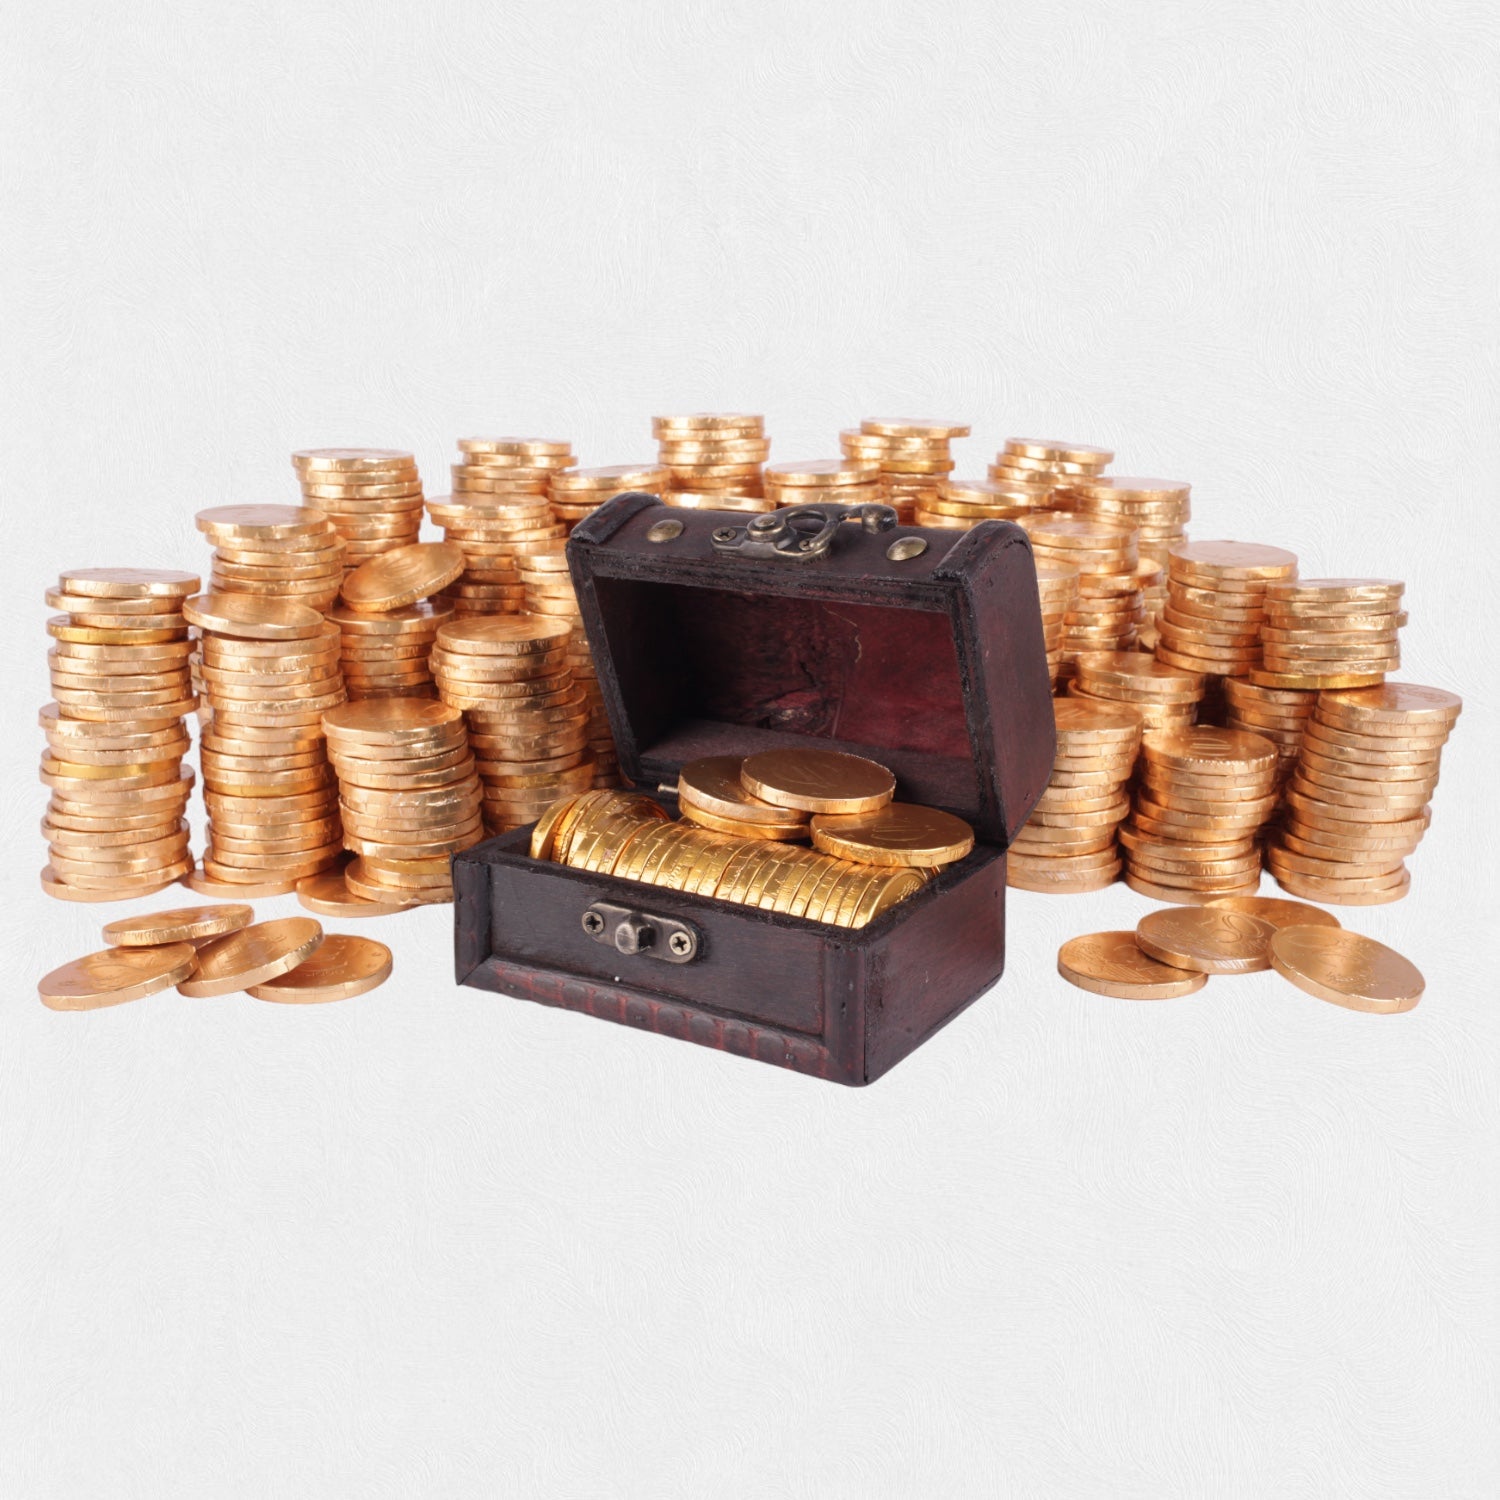 Skattekiste med chokolade guldmønter 130 g